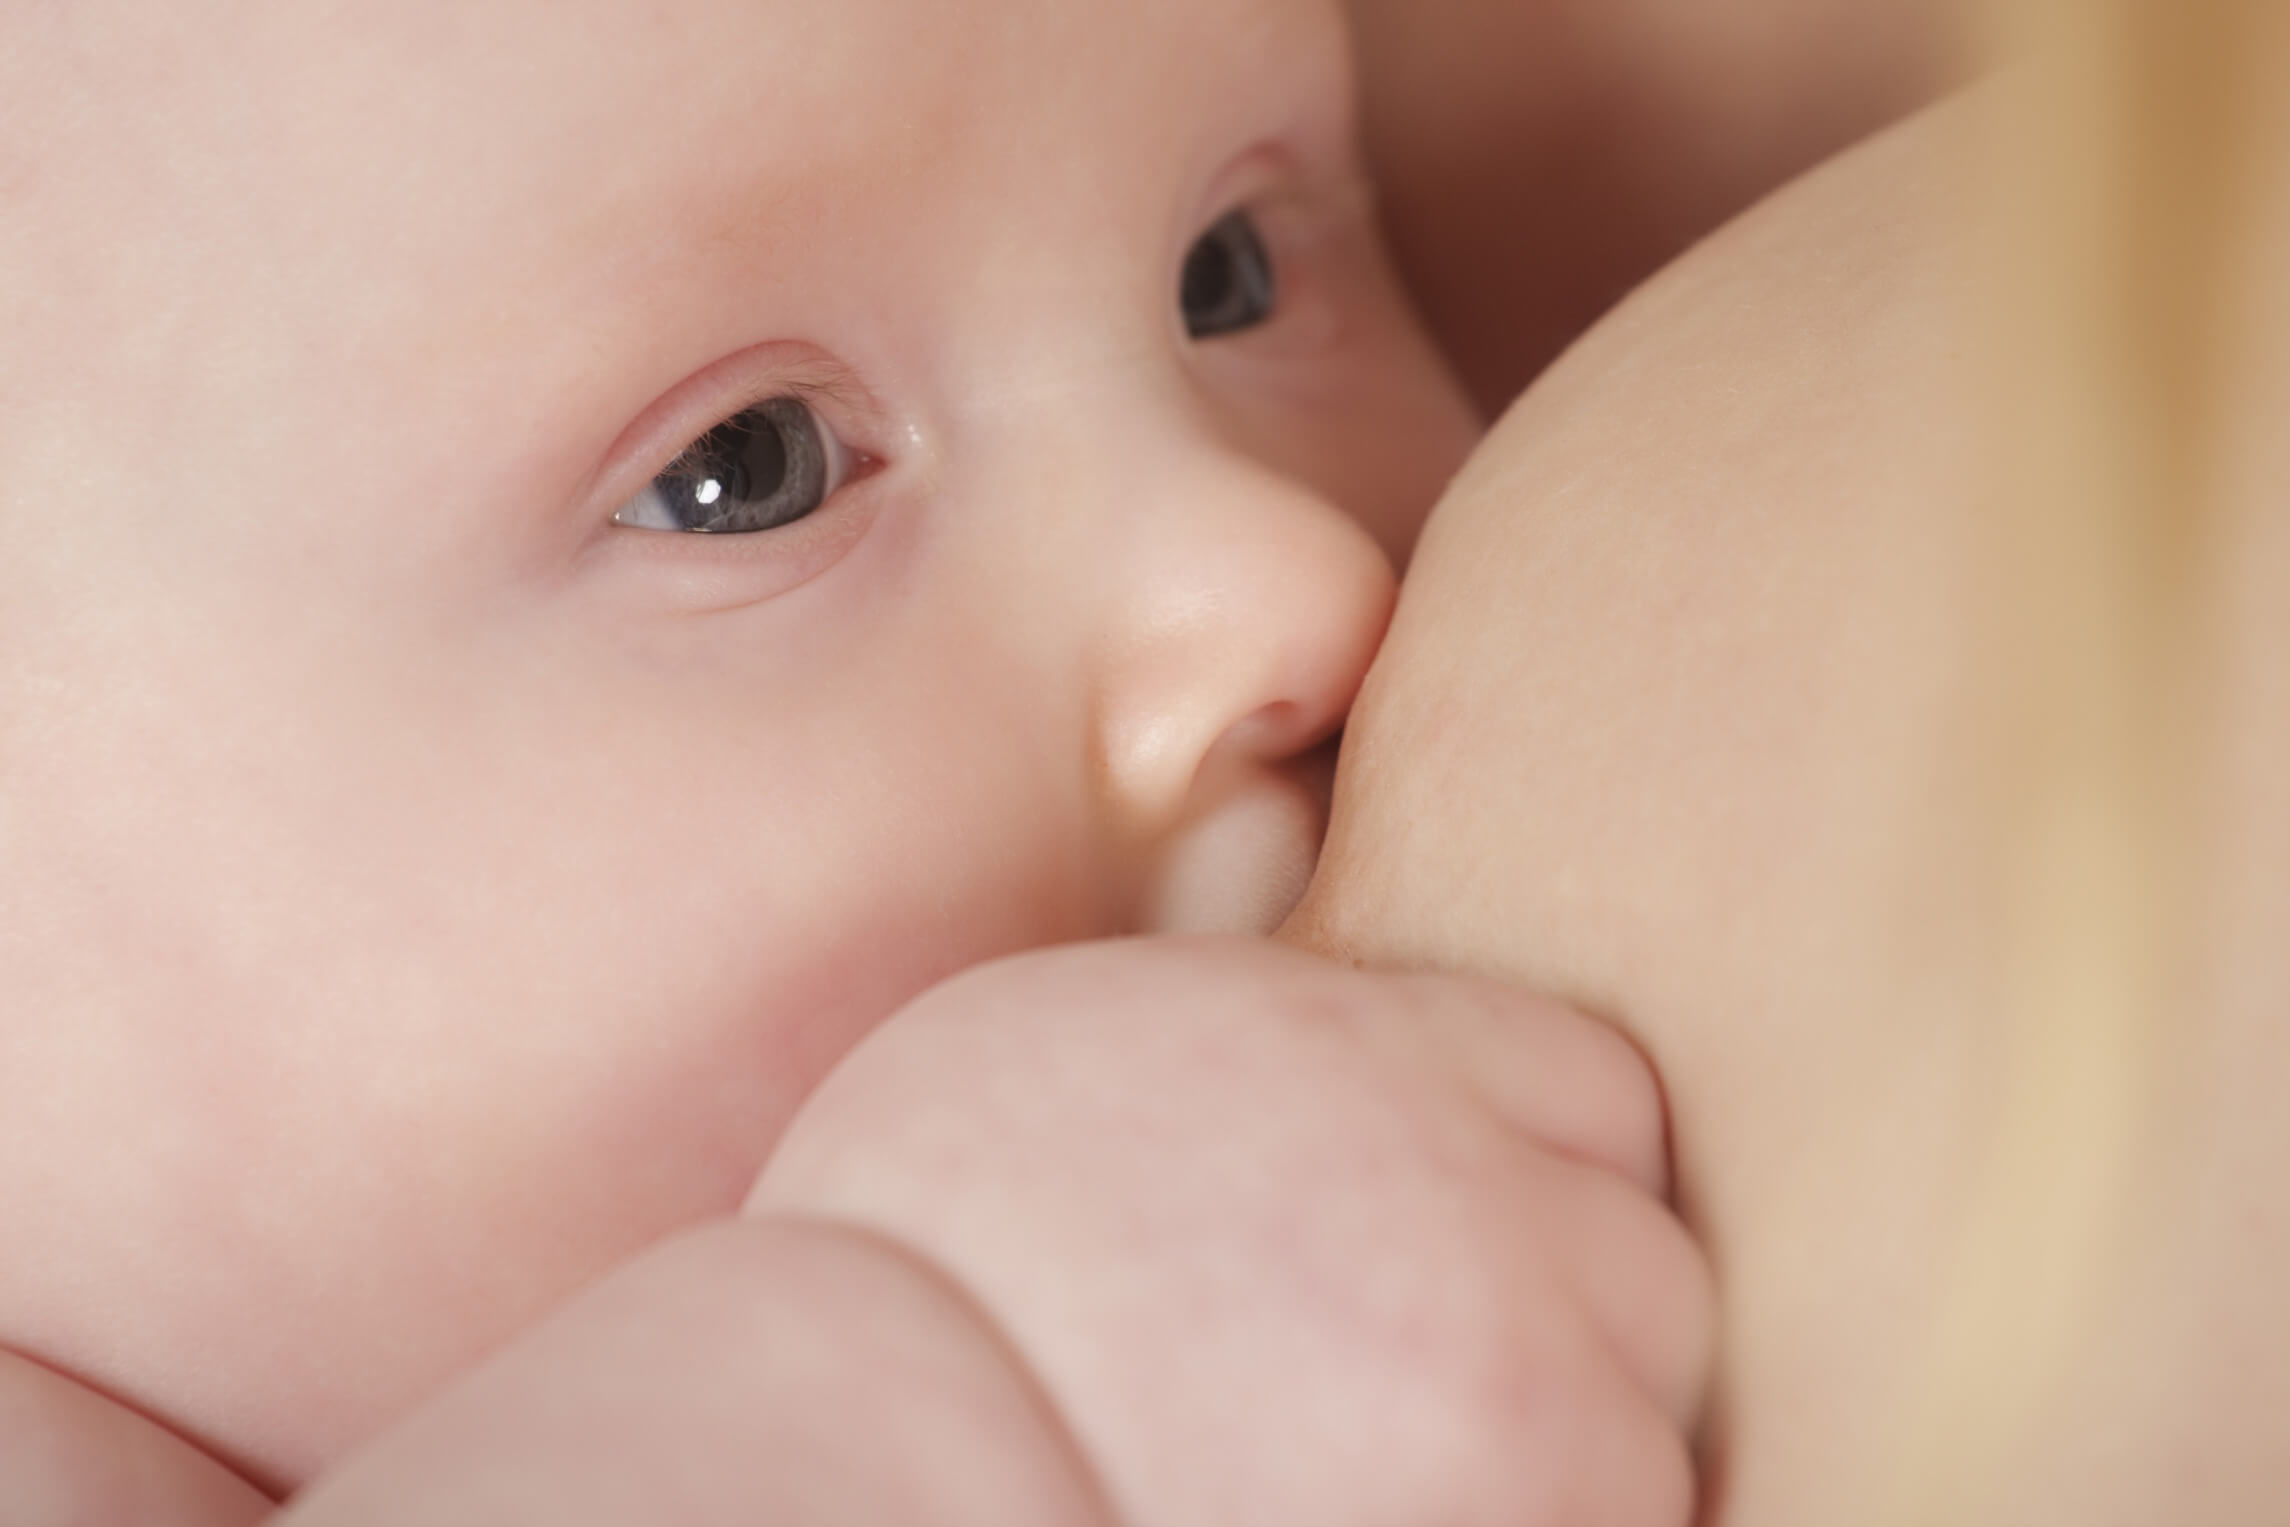 Child breastfeeding